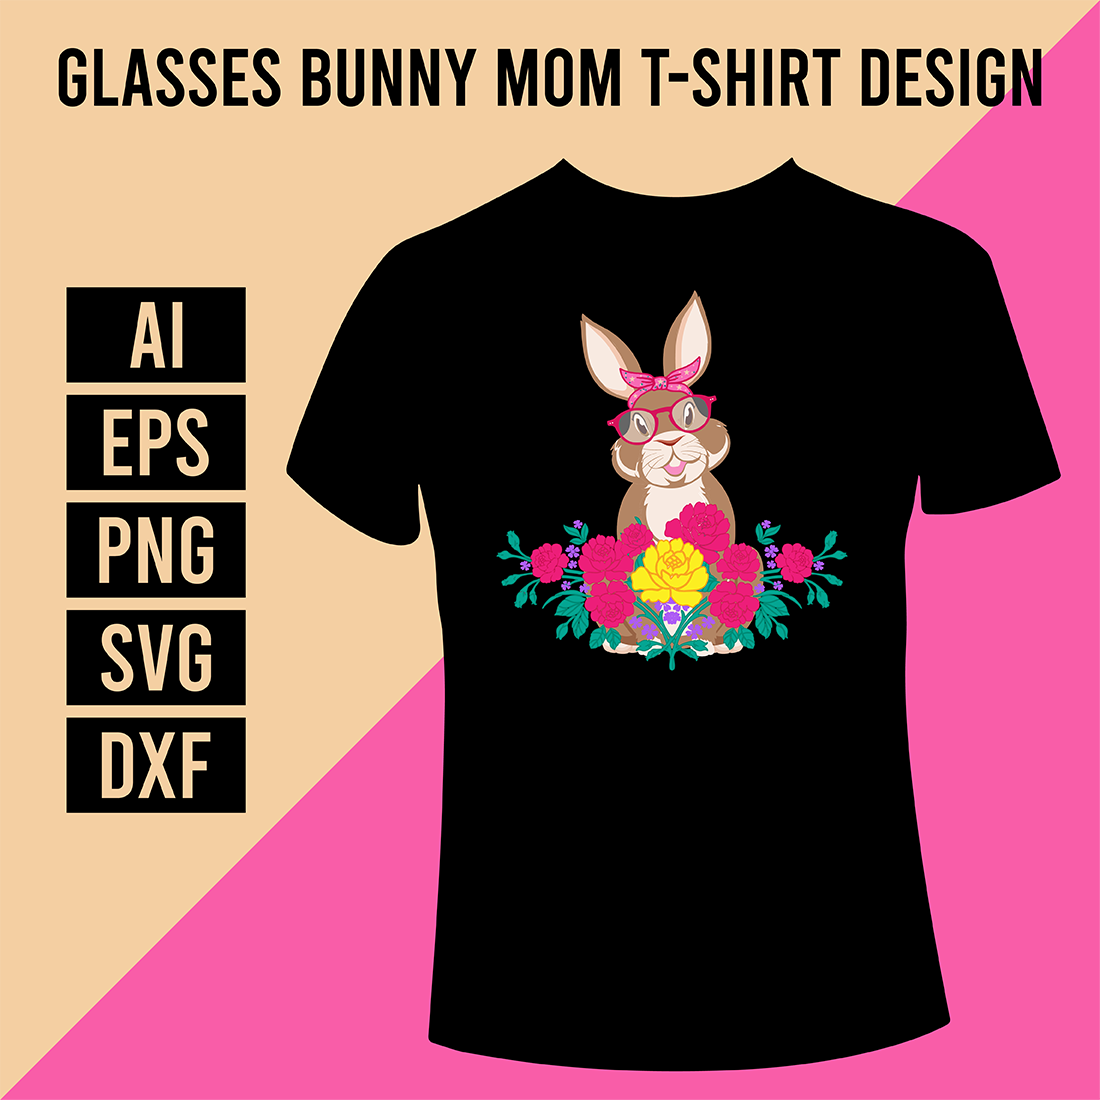 Glasses Bunny Mom T-Shirt Design cover image.